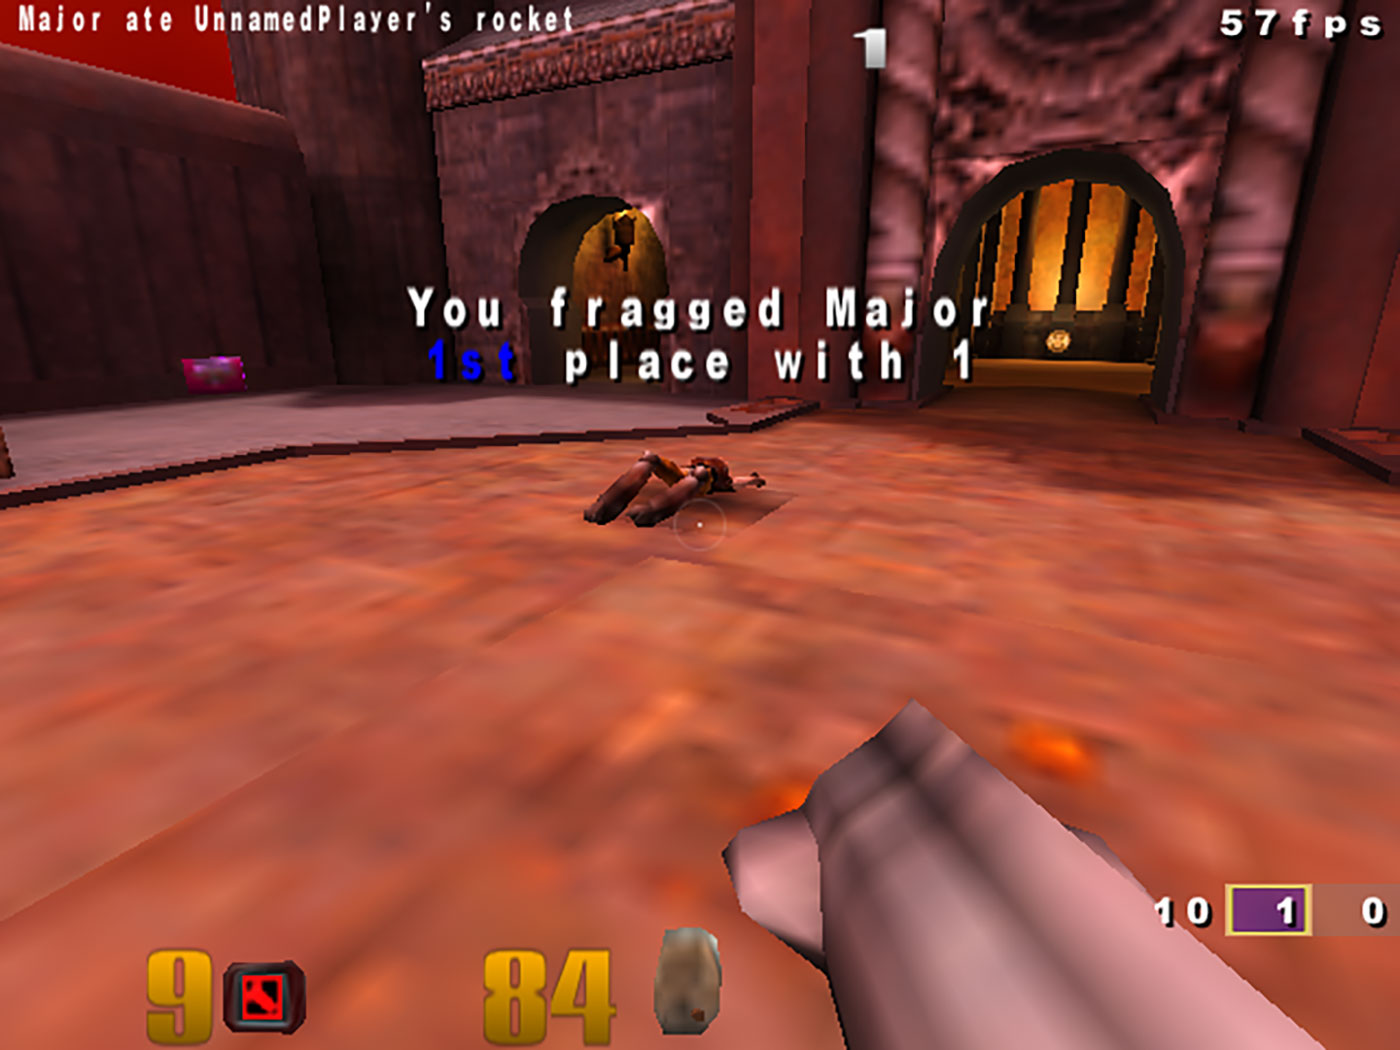 Major ate UnnamedPlayer's rocket in Quake III Arena on a Raspberry Pi